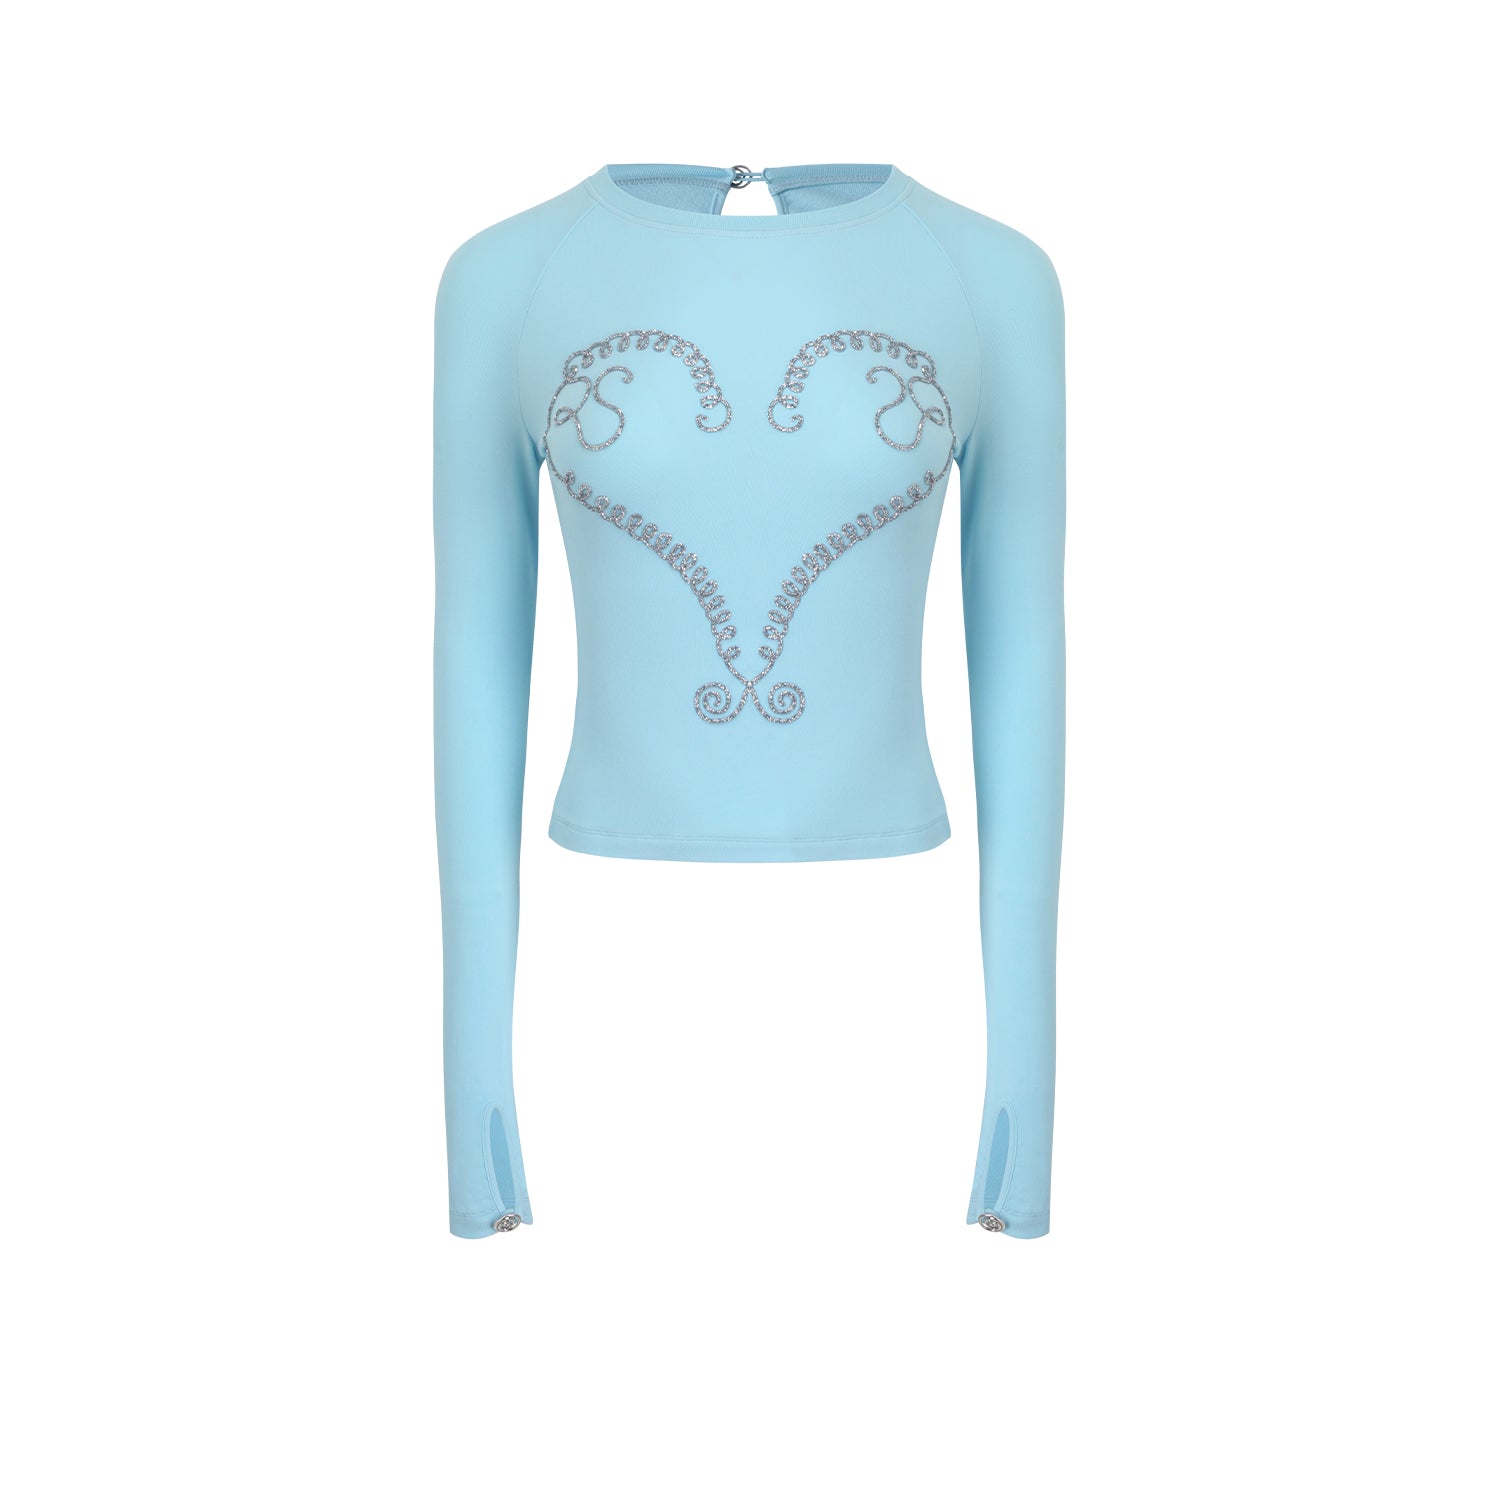 Blue RS heart vine rhinestone T-shirt